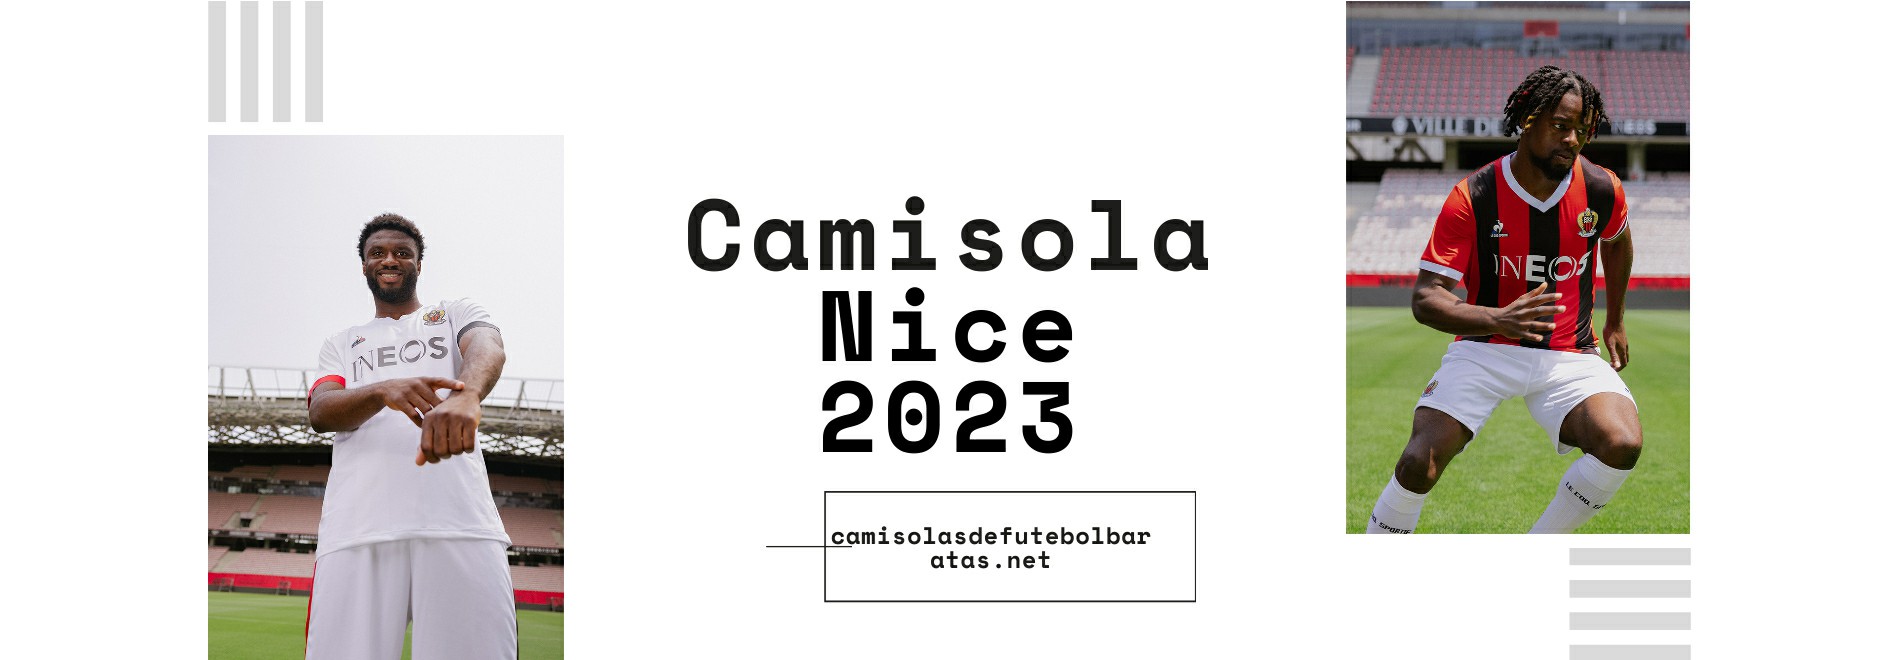 Camisola Nice 2023-2024